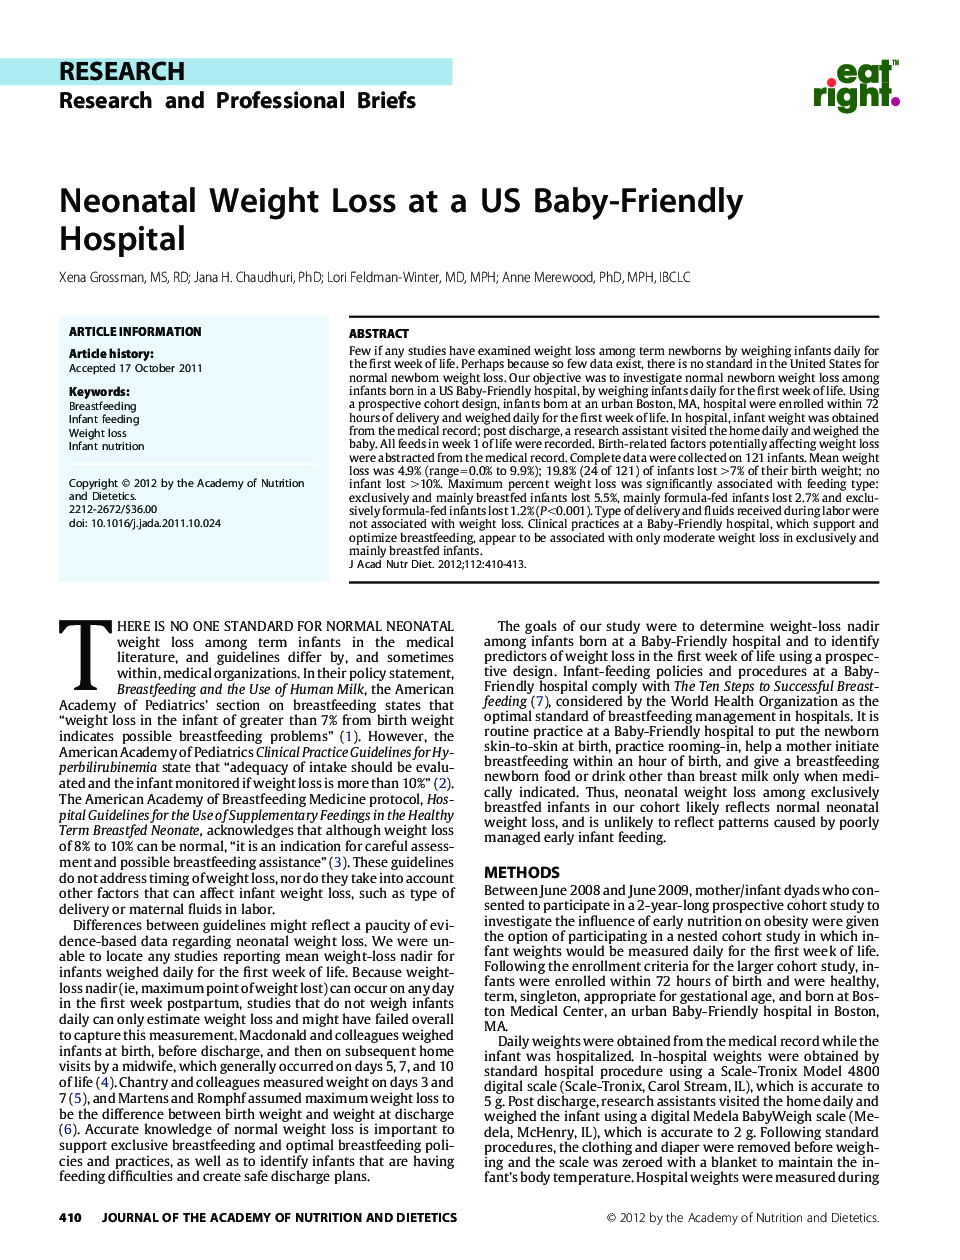 Neonatal Weight Loss at a US Baby-Friendly Hospital 